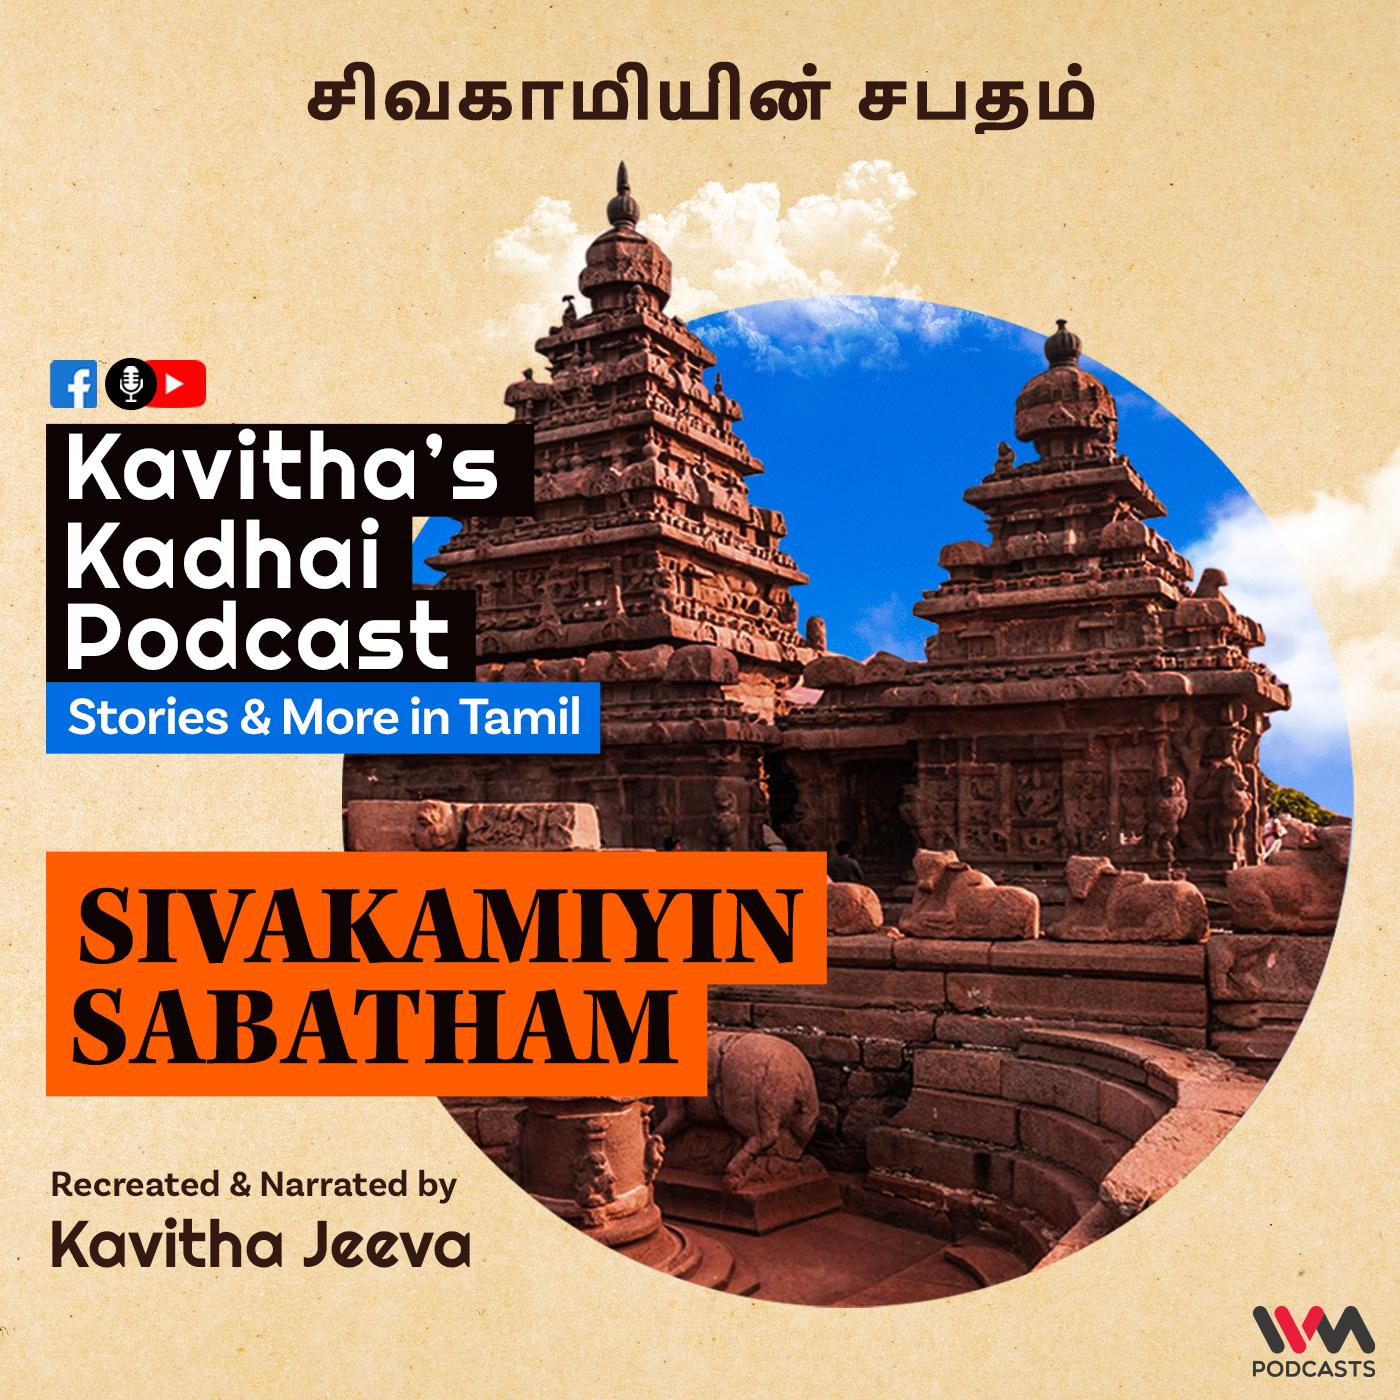 KadhaiPodcast's Sivakamiyin Sabatham with Kavitha Jeeva - Episode #105